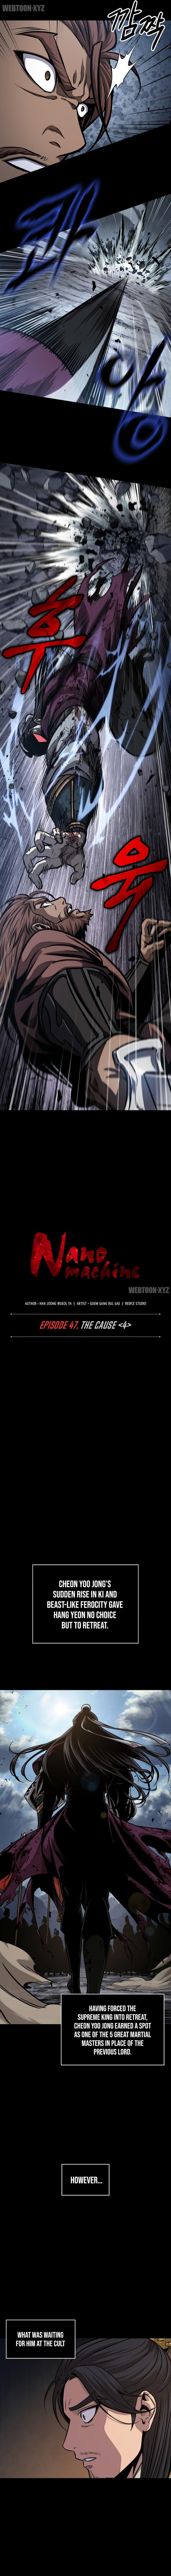 nano-machine-chap-131-3